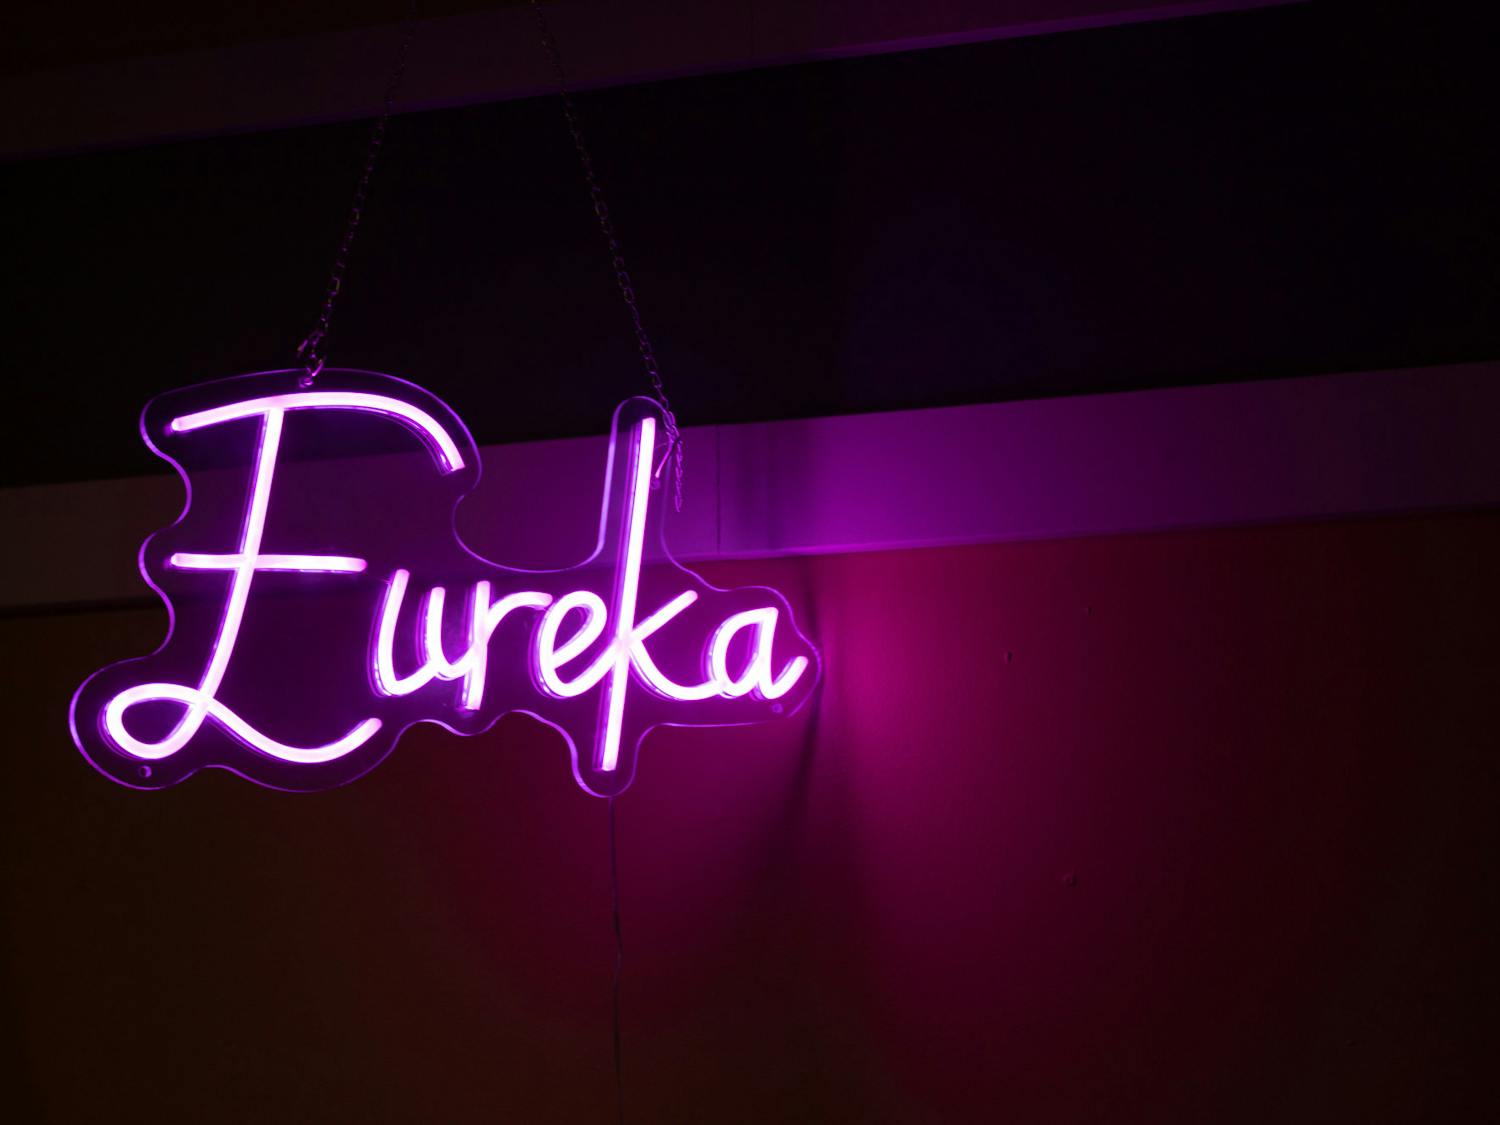 Eureka Room - 1 of 3